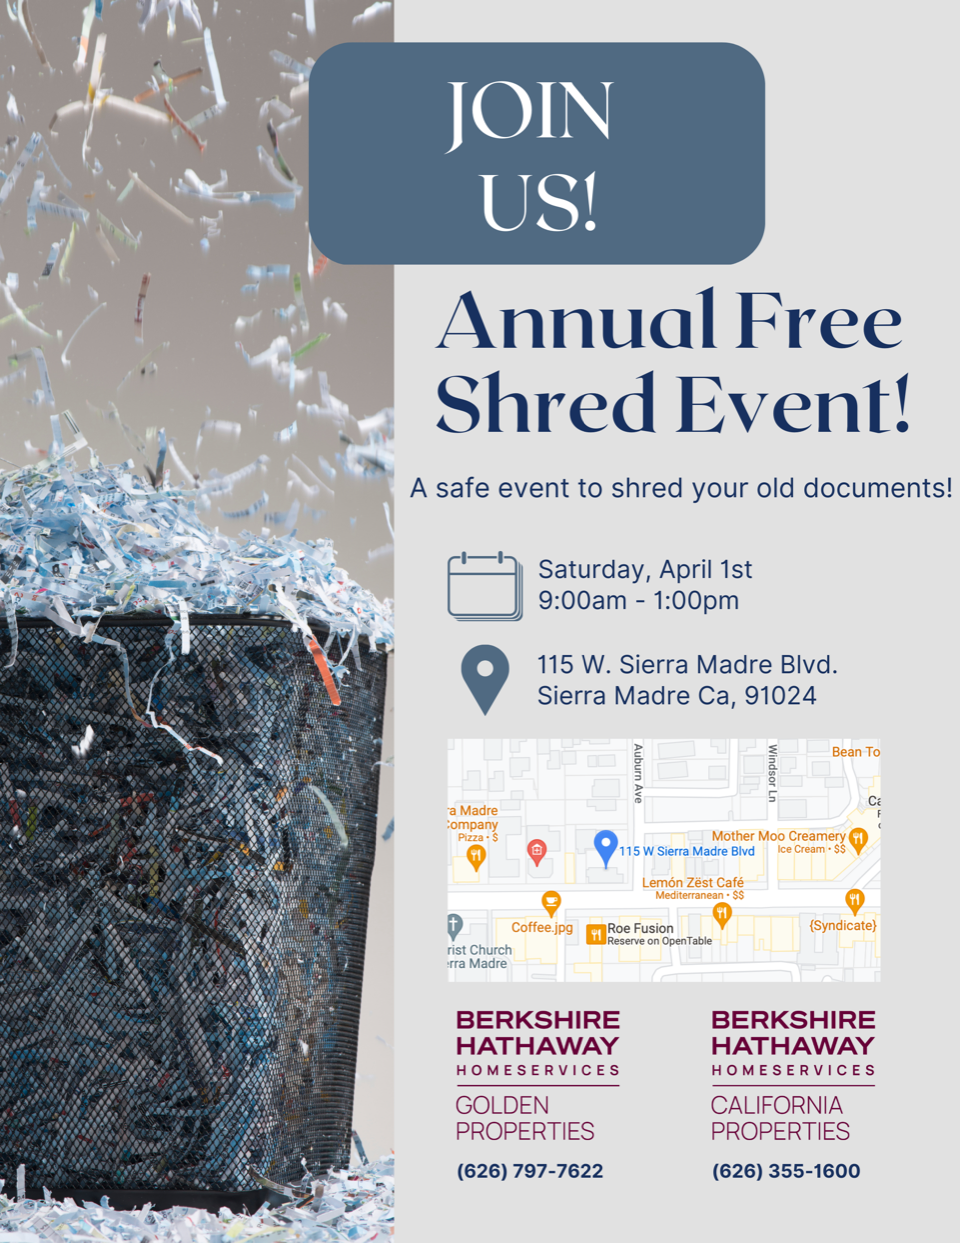 Berkshire Hathaway free shred event 